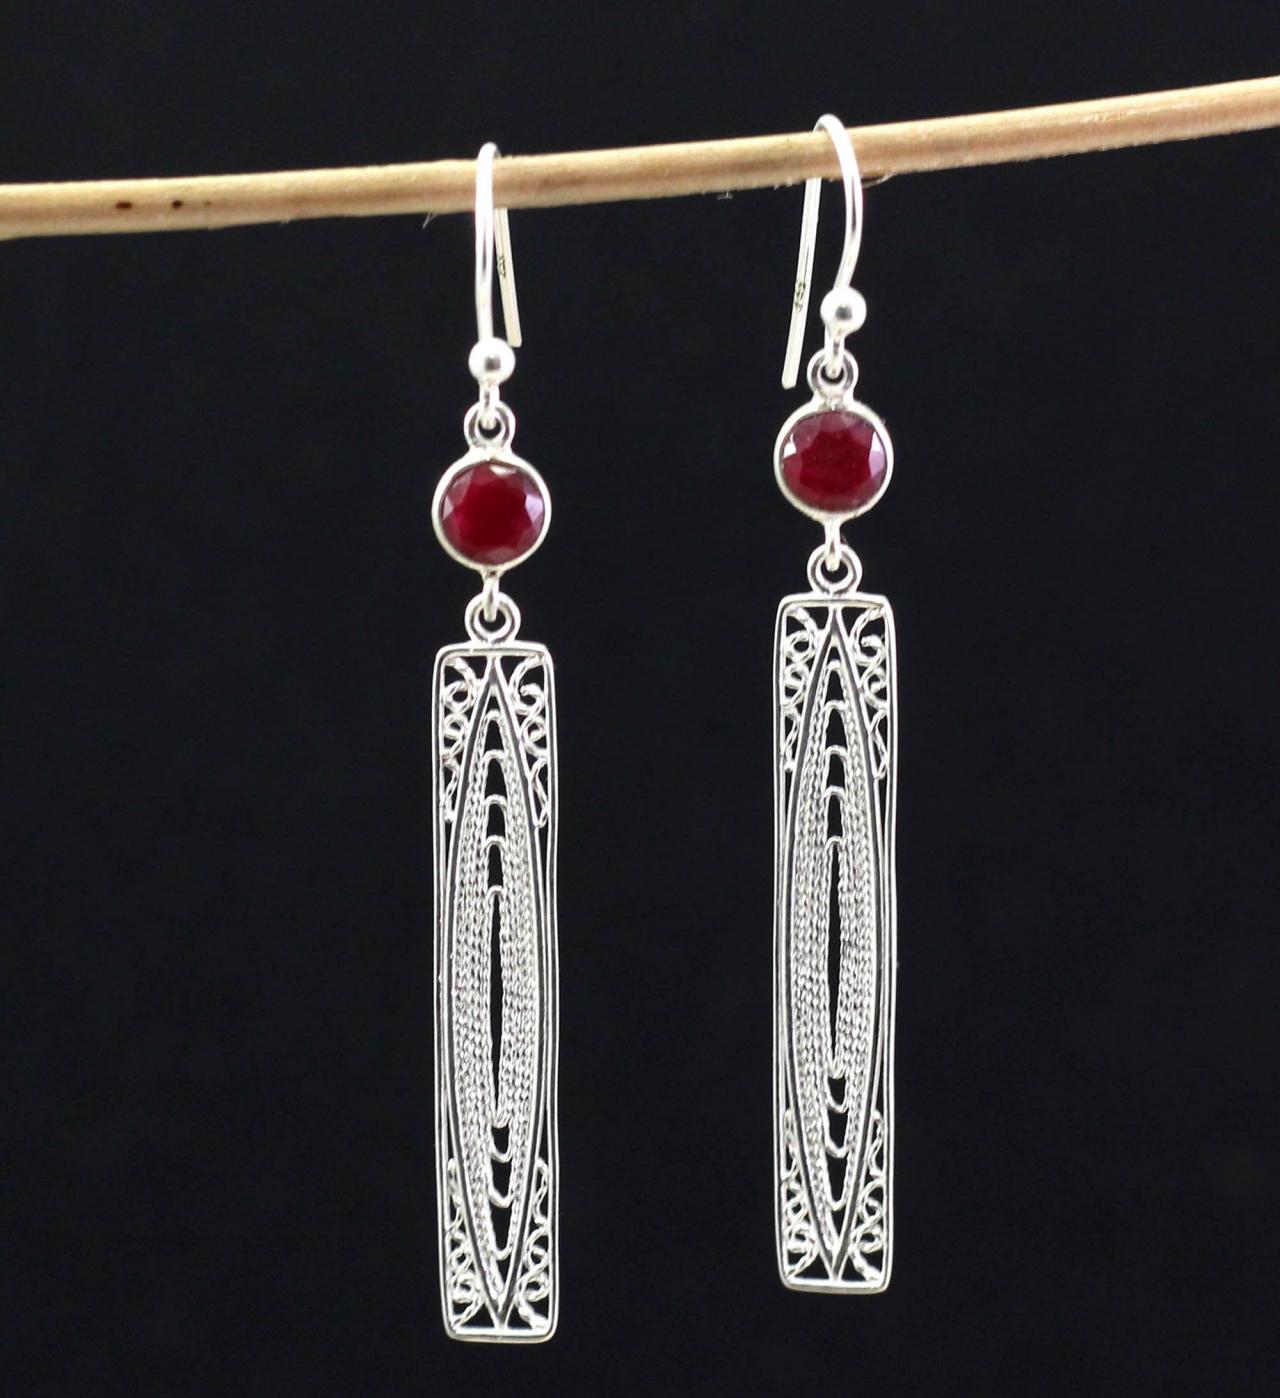 Fine Filigree Hanging Earring Ruby Earring 925 Sterling Silver Jewelry Handmade Earring Valentine Gift Red Corrundum Long Danglers Eter1003